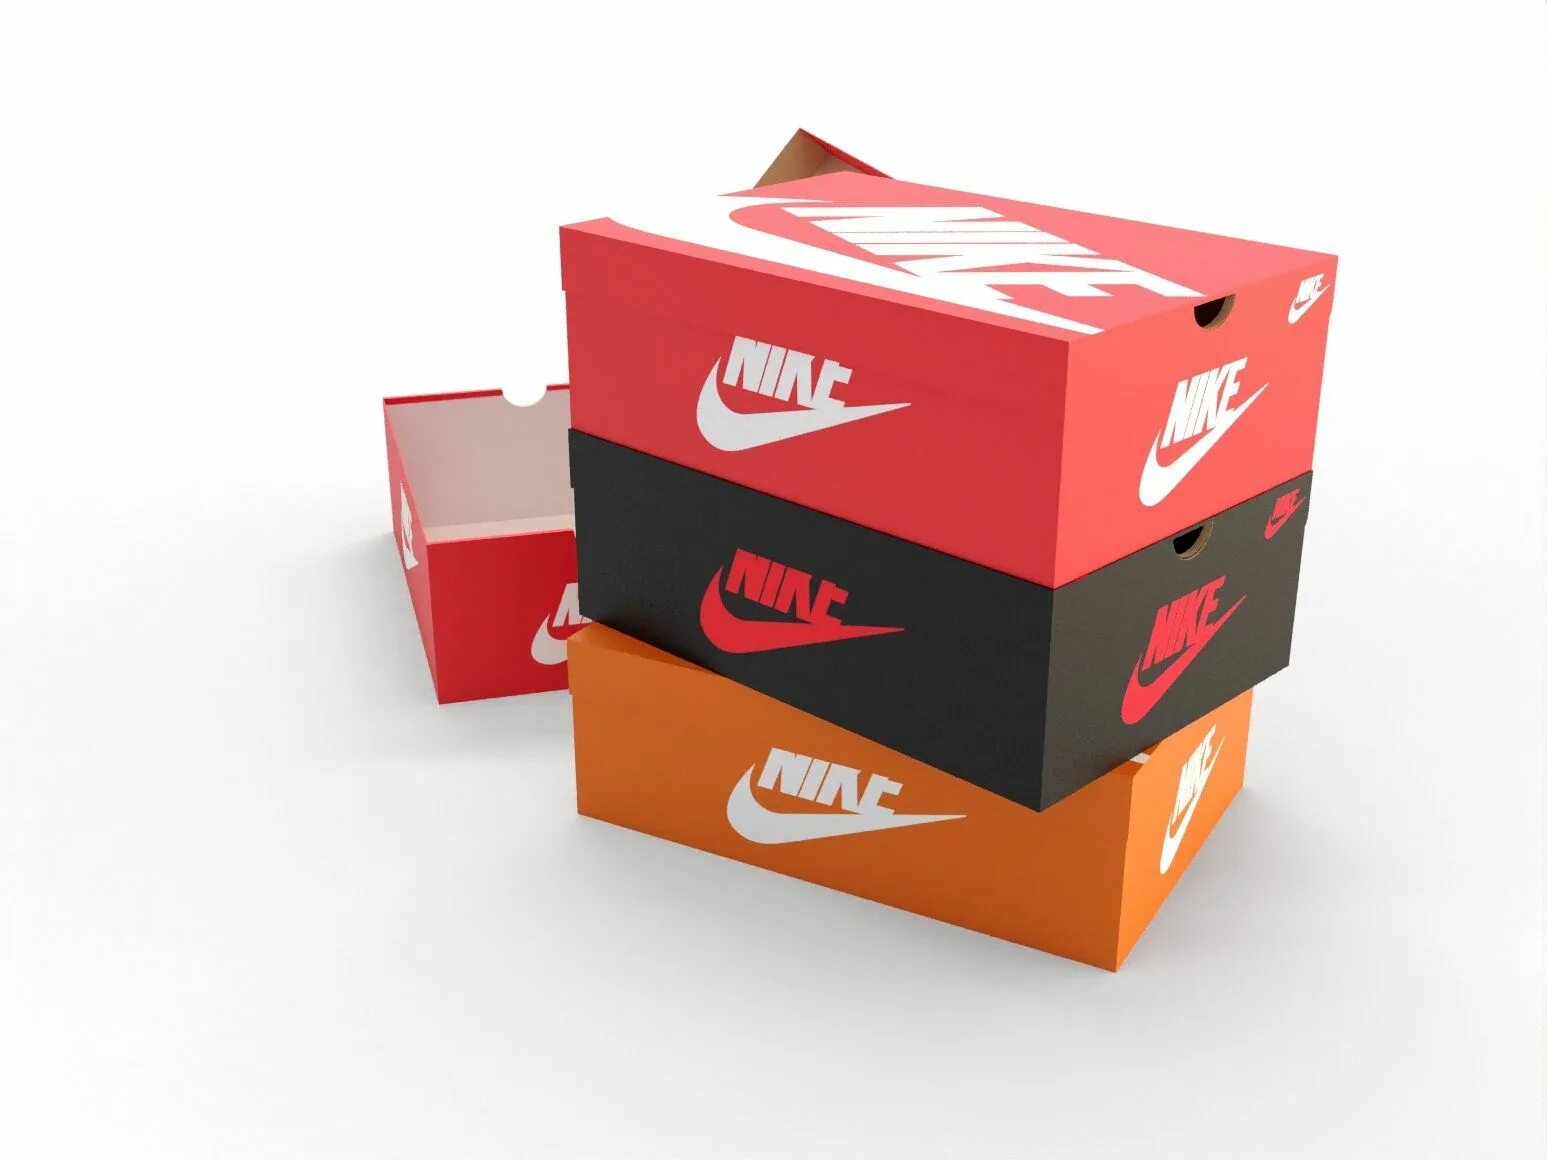 Nike Sneakers and Boxes. Nike Box msk. Nike-Shoe-Box-Classic-04. Nike Box Size. Найк бокс